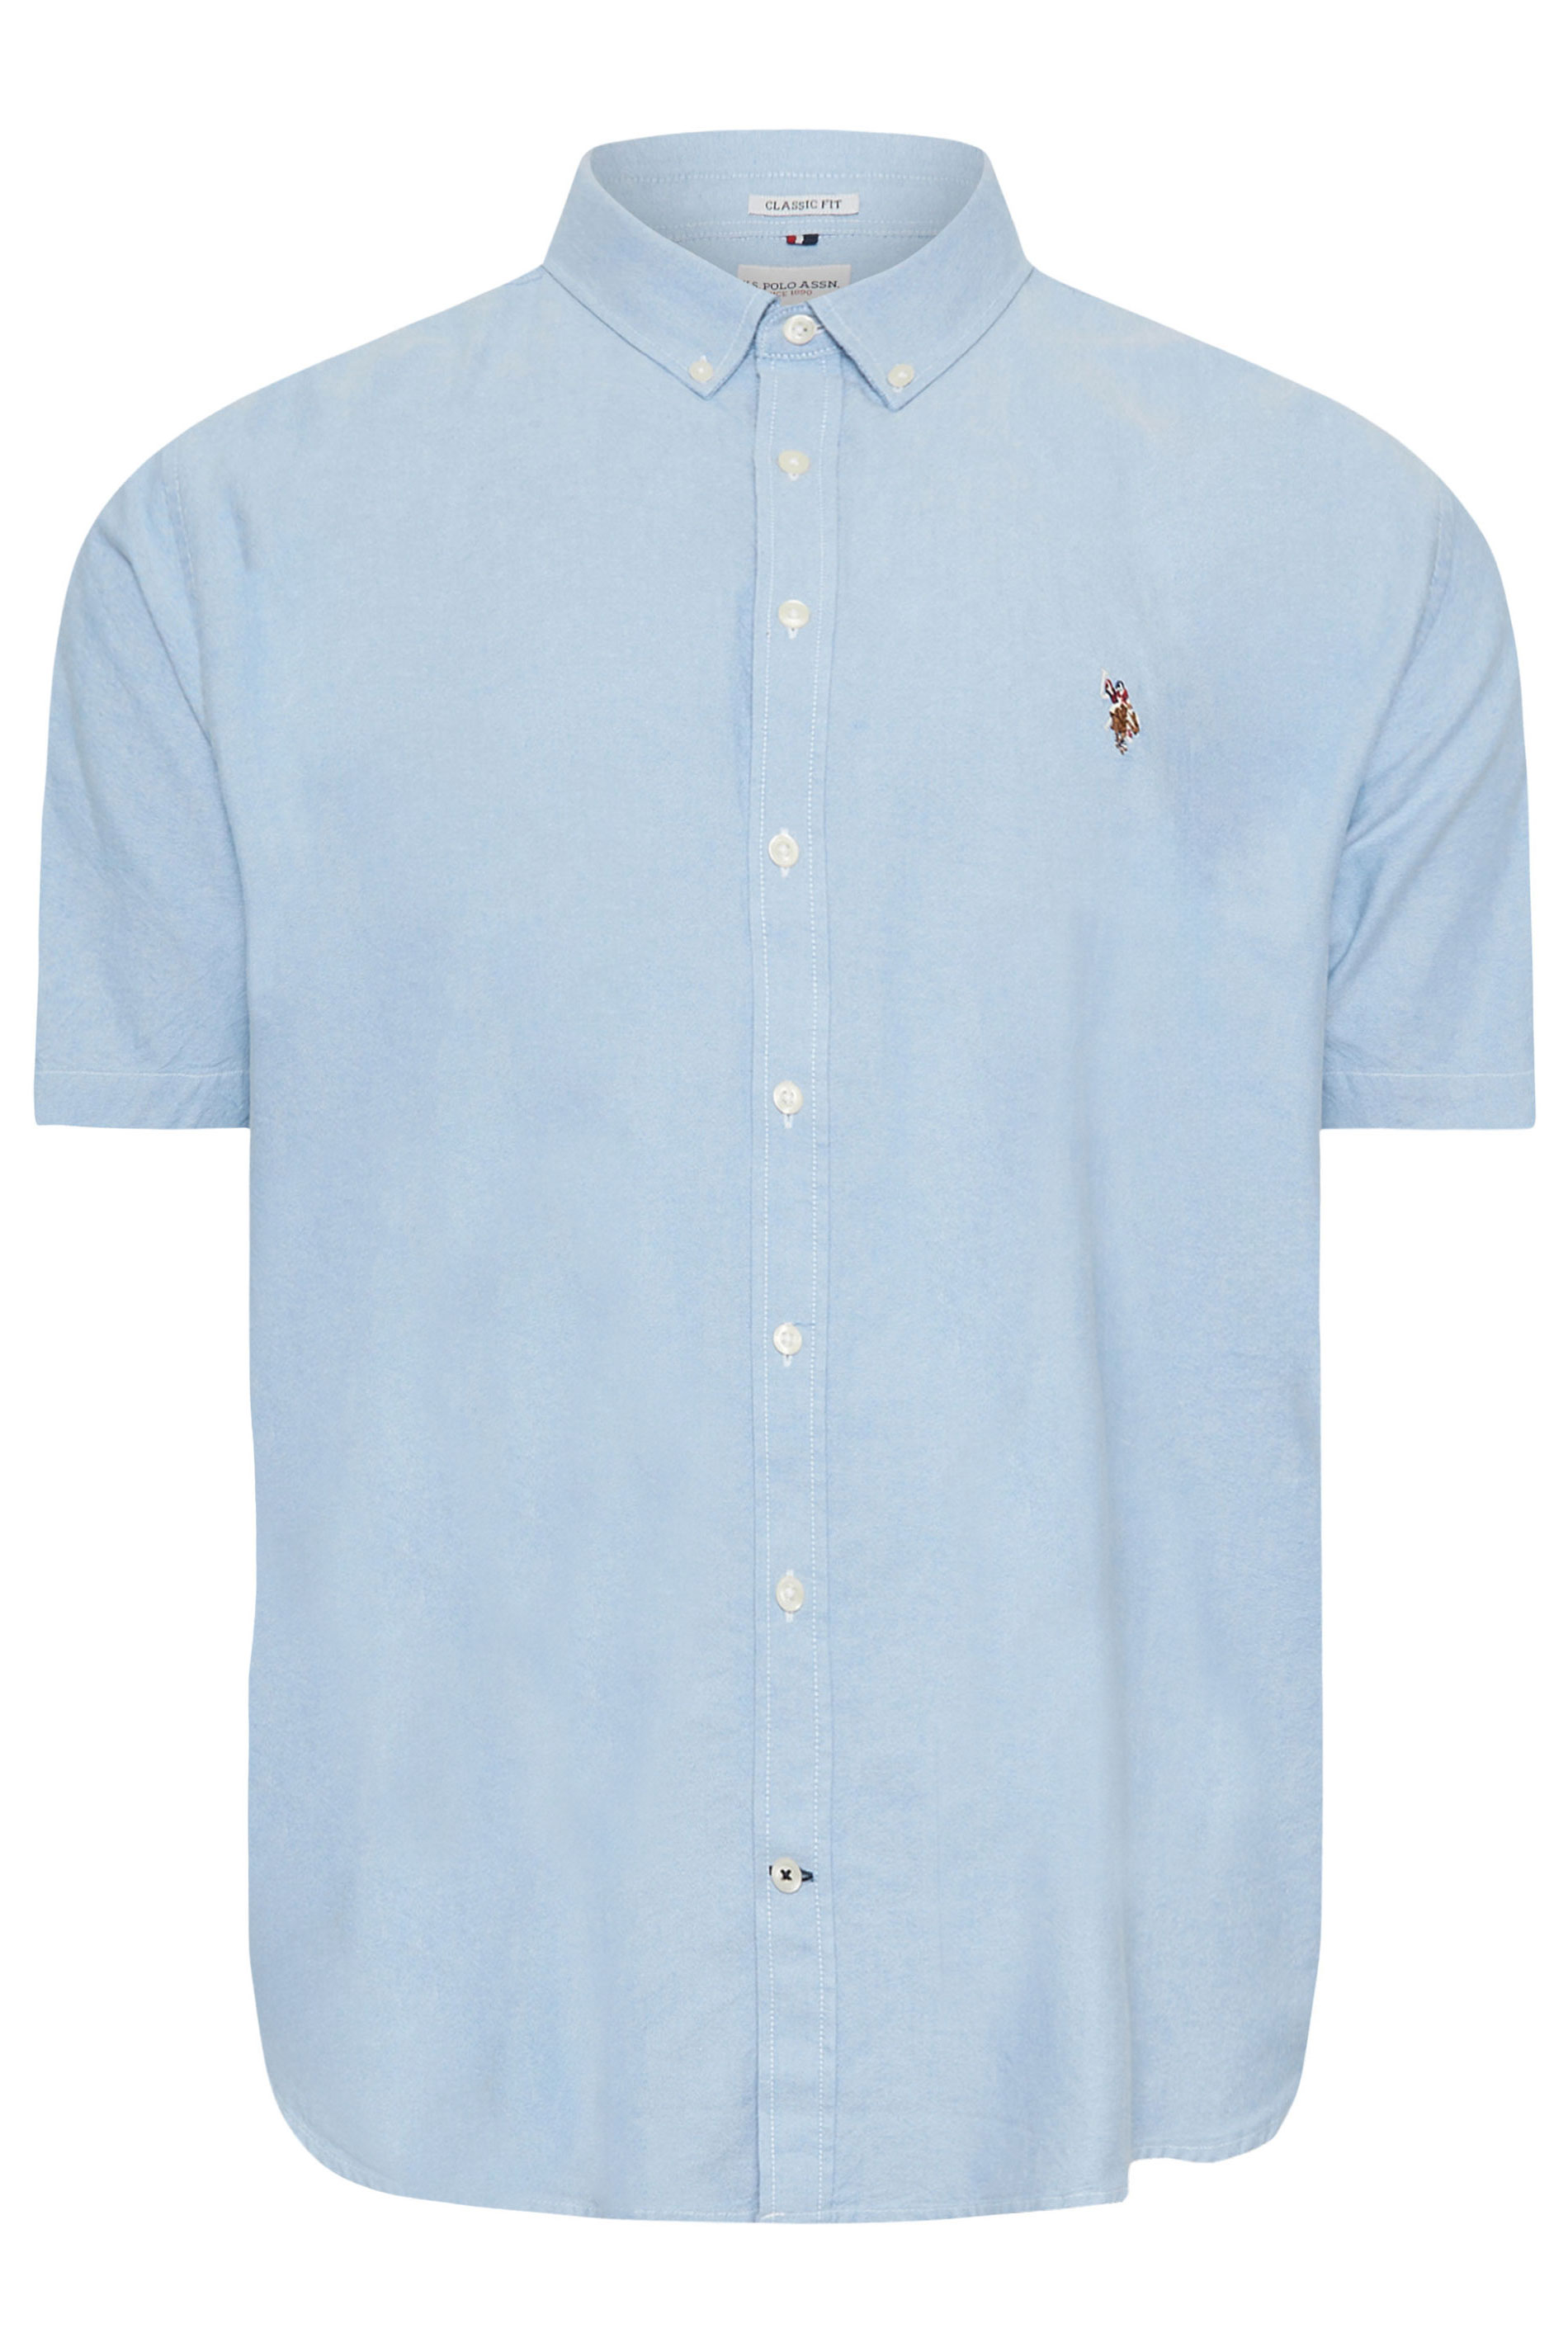 U.S. POLO ASSN. Blue Short Sleeve Oxford Shirt | BadRhino 2